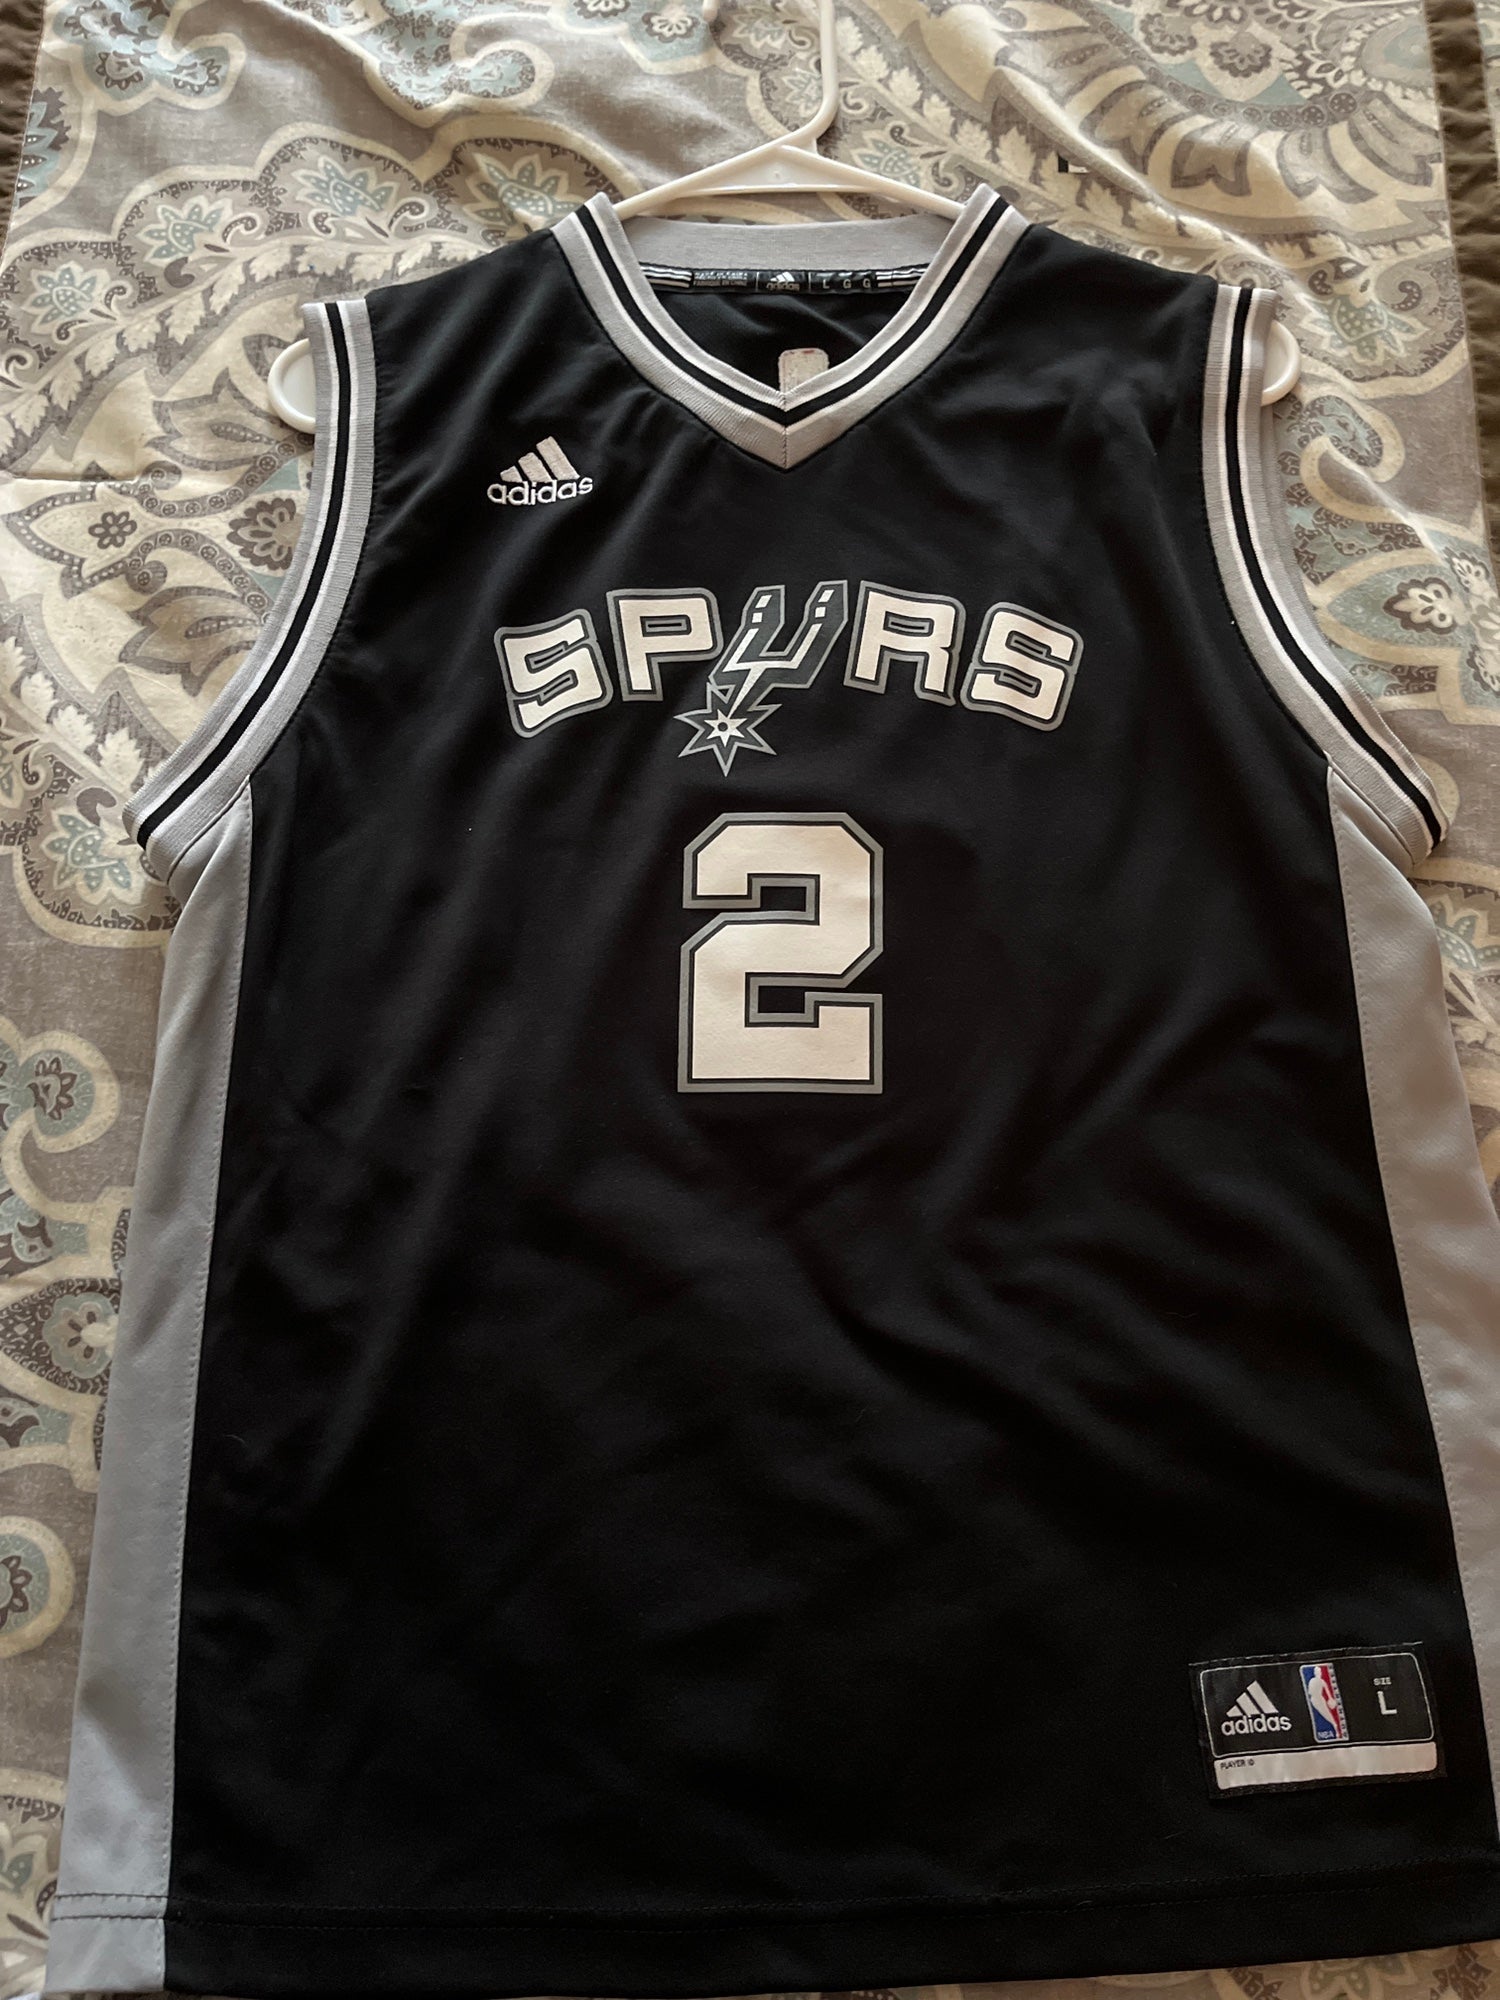 Youth Large NBA Spurs jersey (LEONARD)